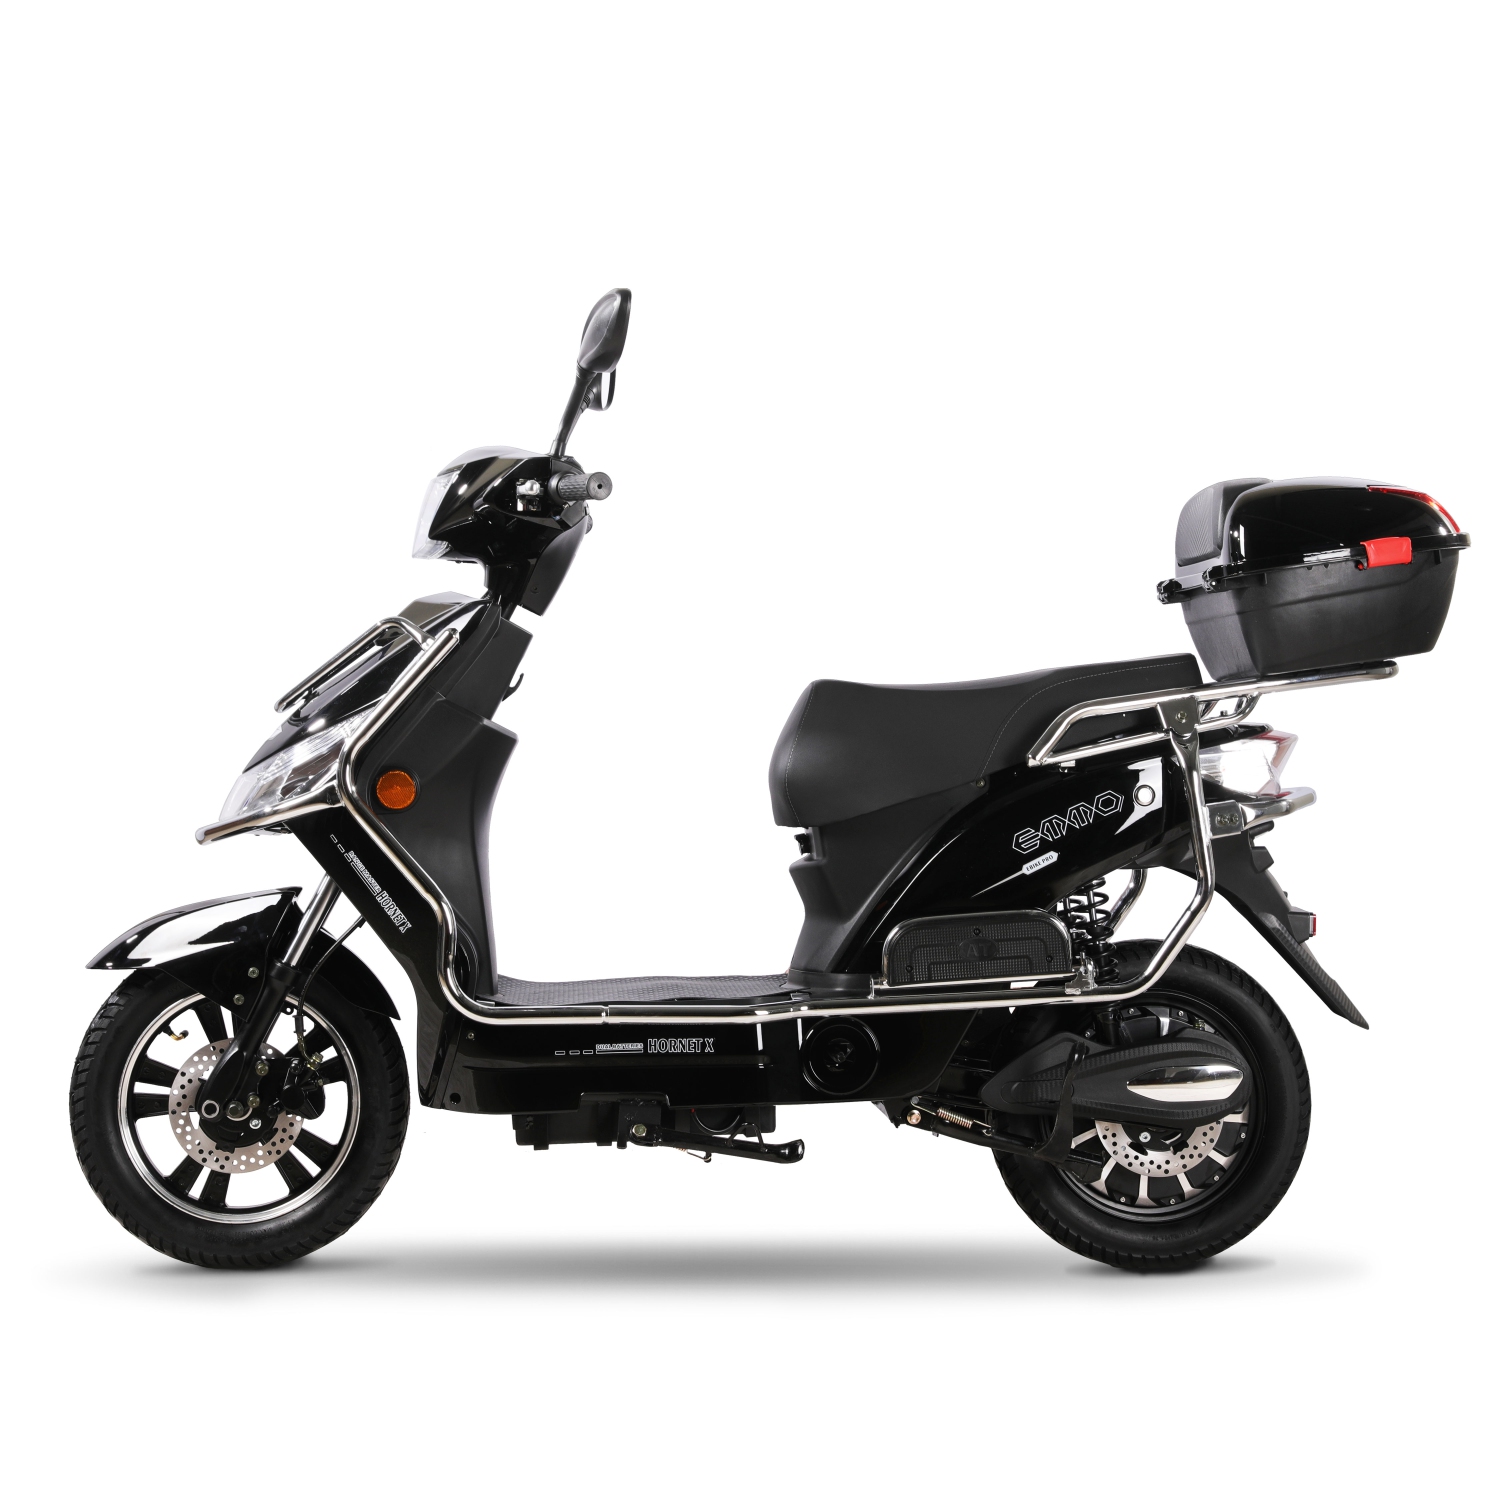 Emmo Utility Scooter E-Bike | Long Range Dual Removable Battery | QS Motor | Tubeless Tires | Hydraulic Brakes | Hornet X 48V- Black